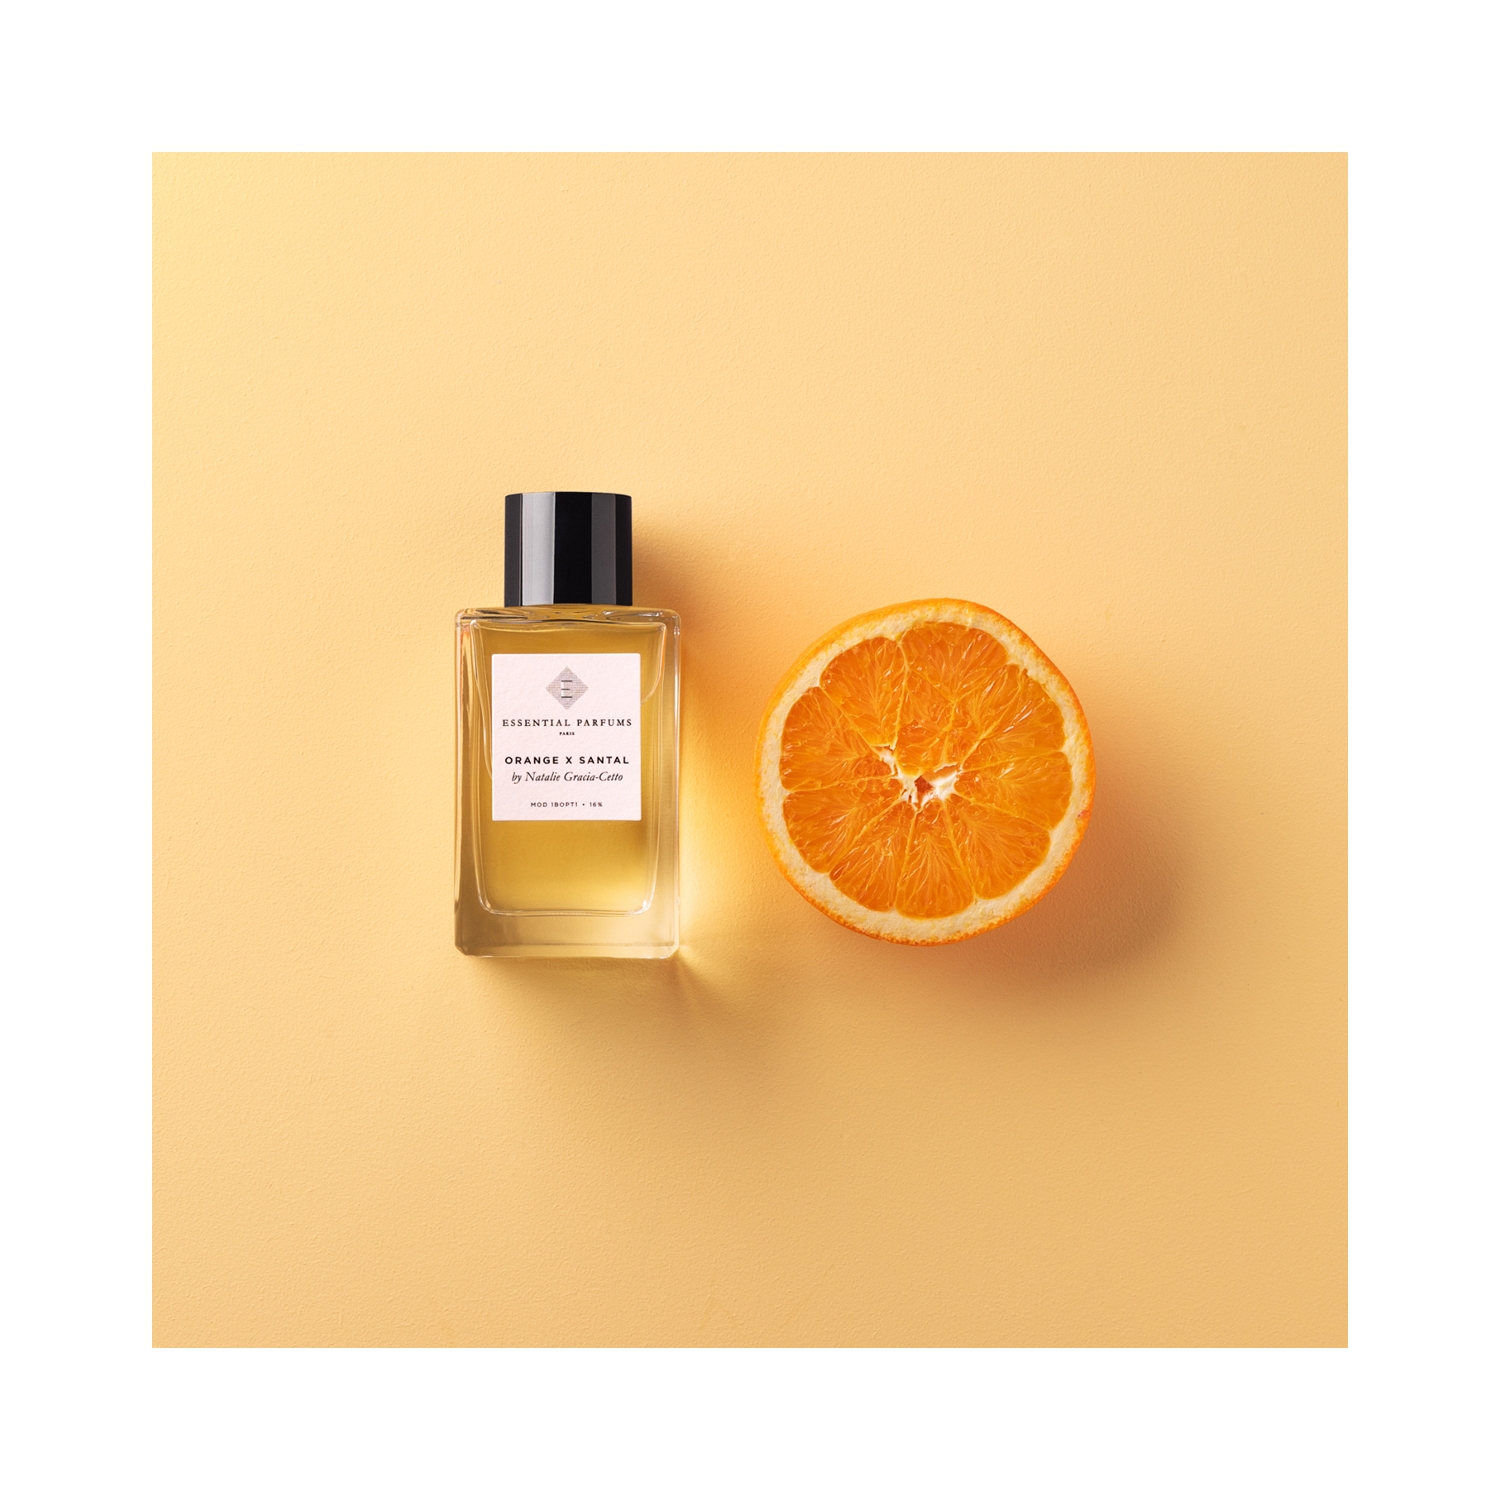 Essential Parfum Orange X Santal Eau De Parfum (100ml) - Essential Parfum